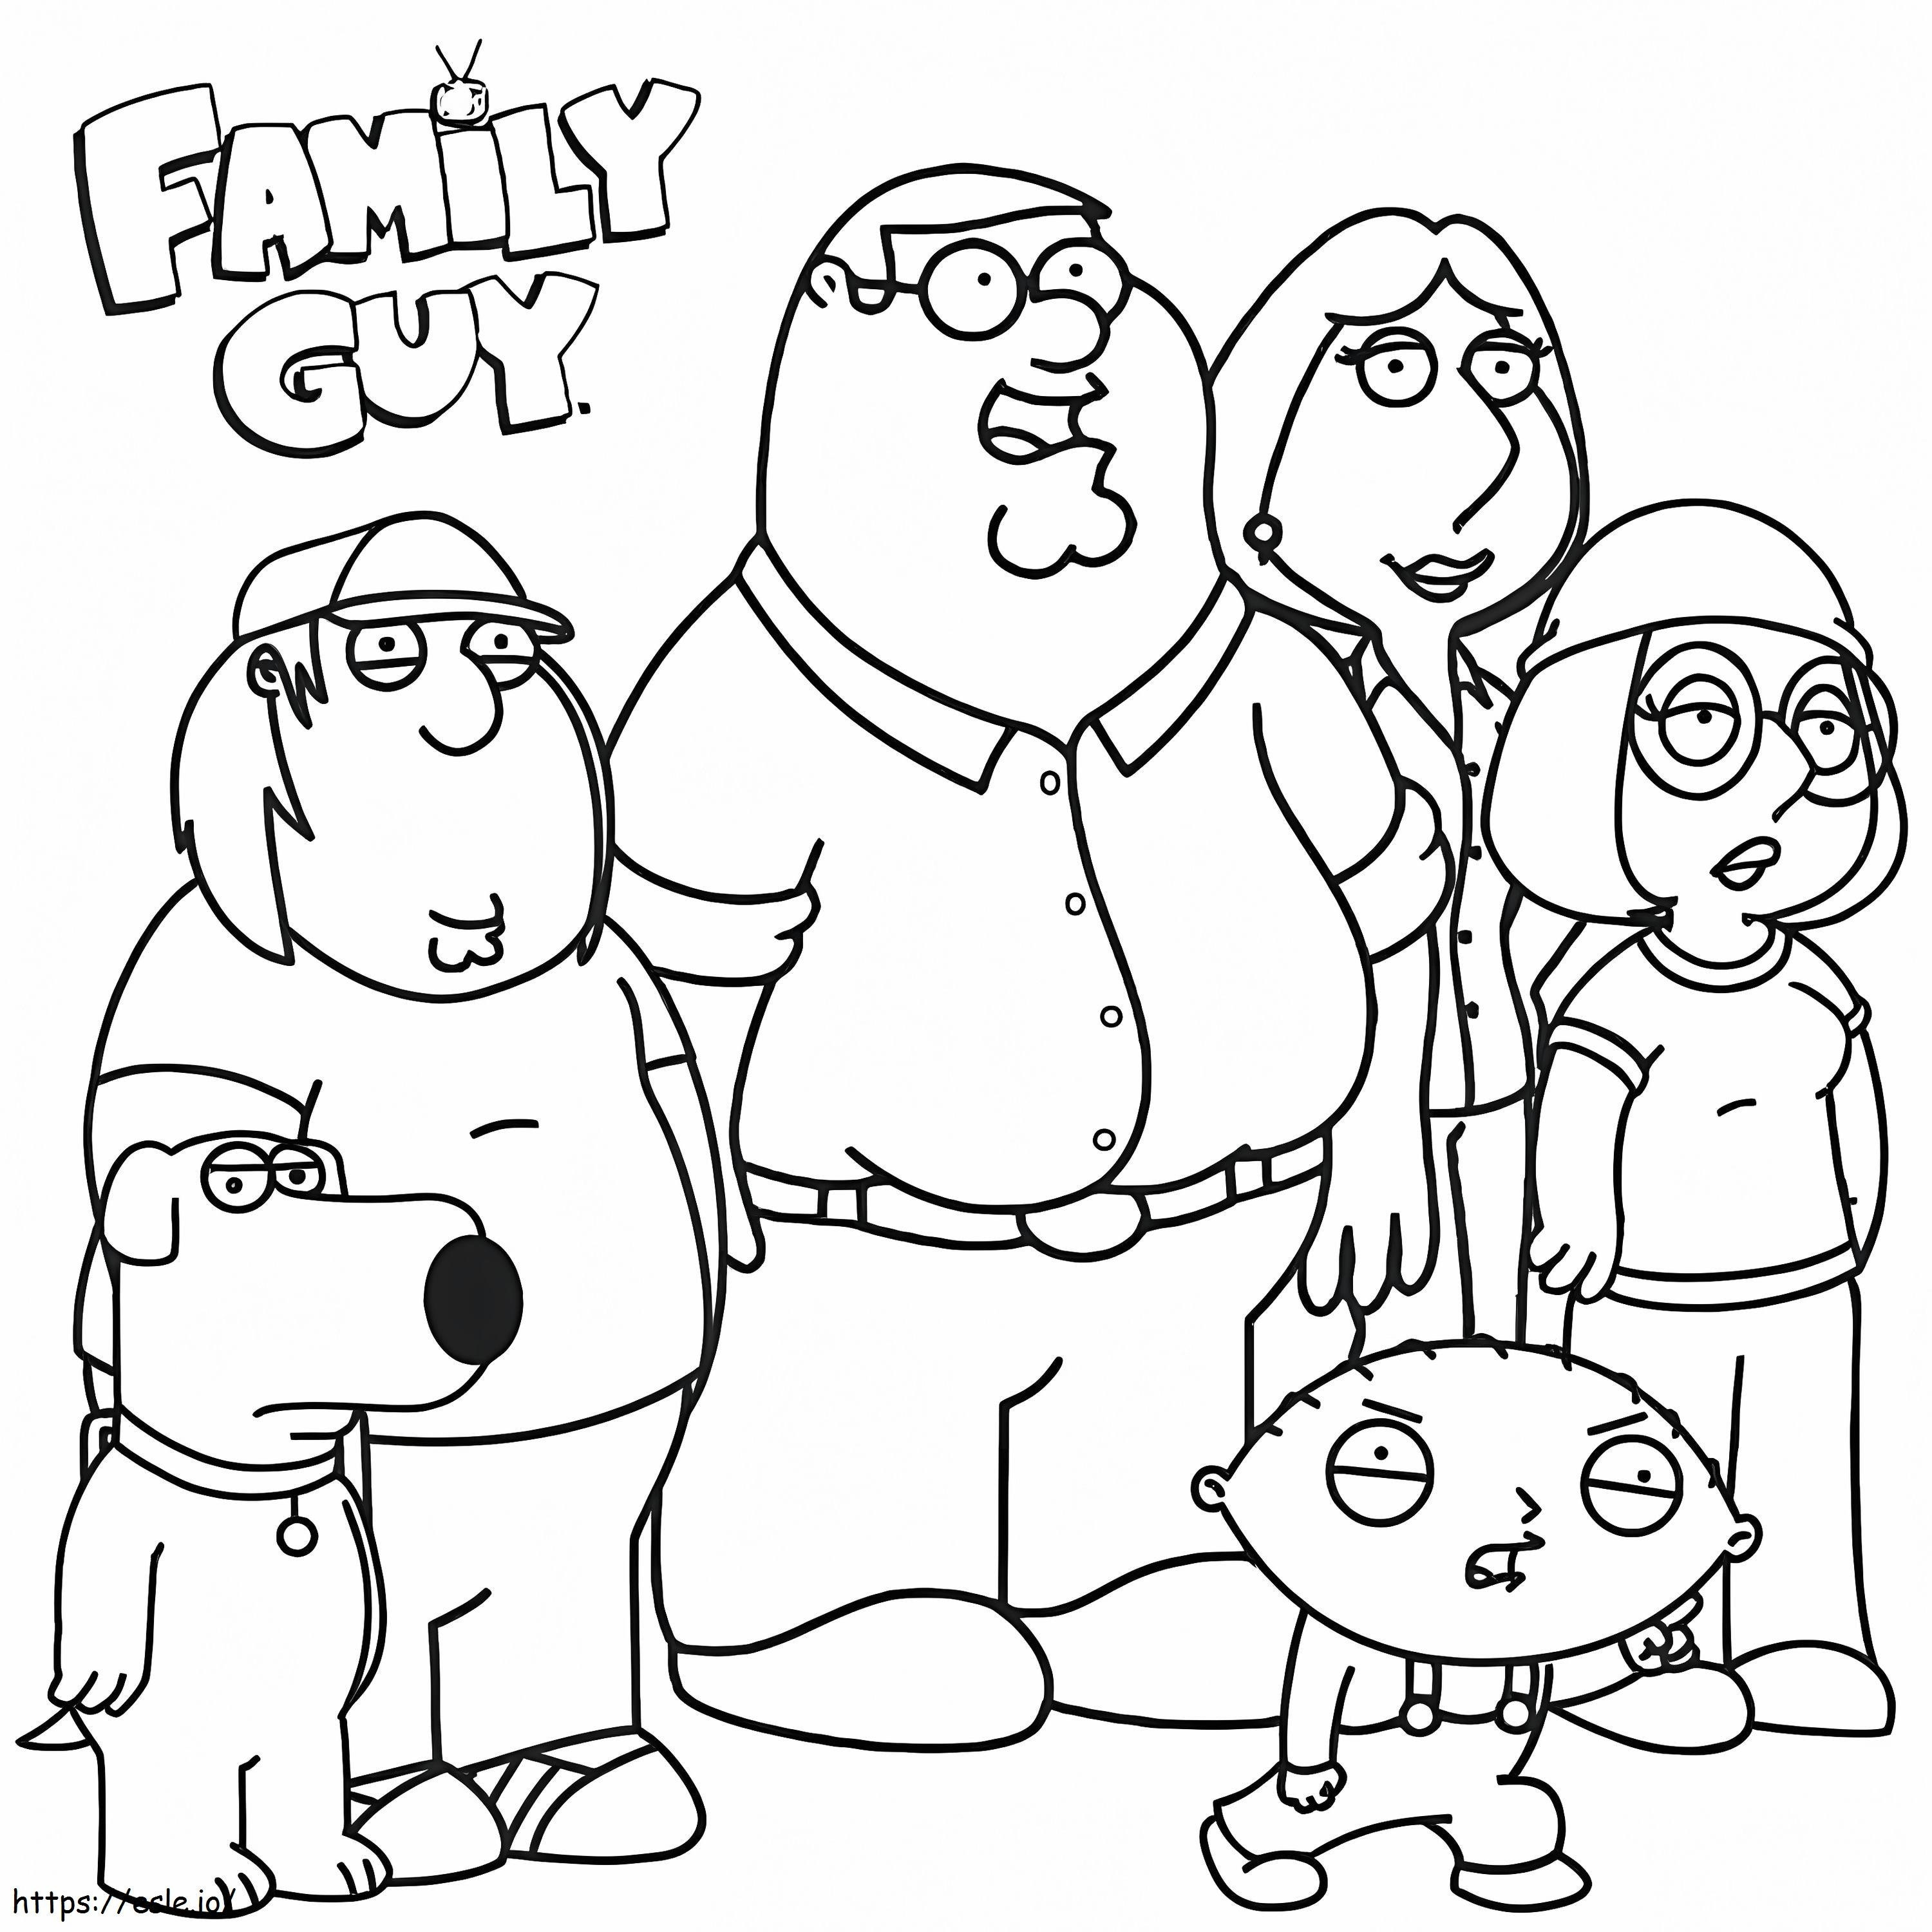 Family Guy kifestő